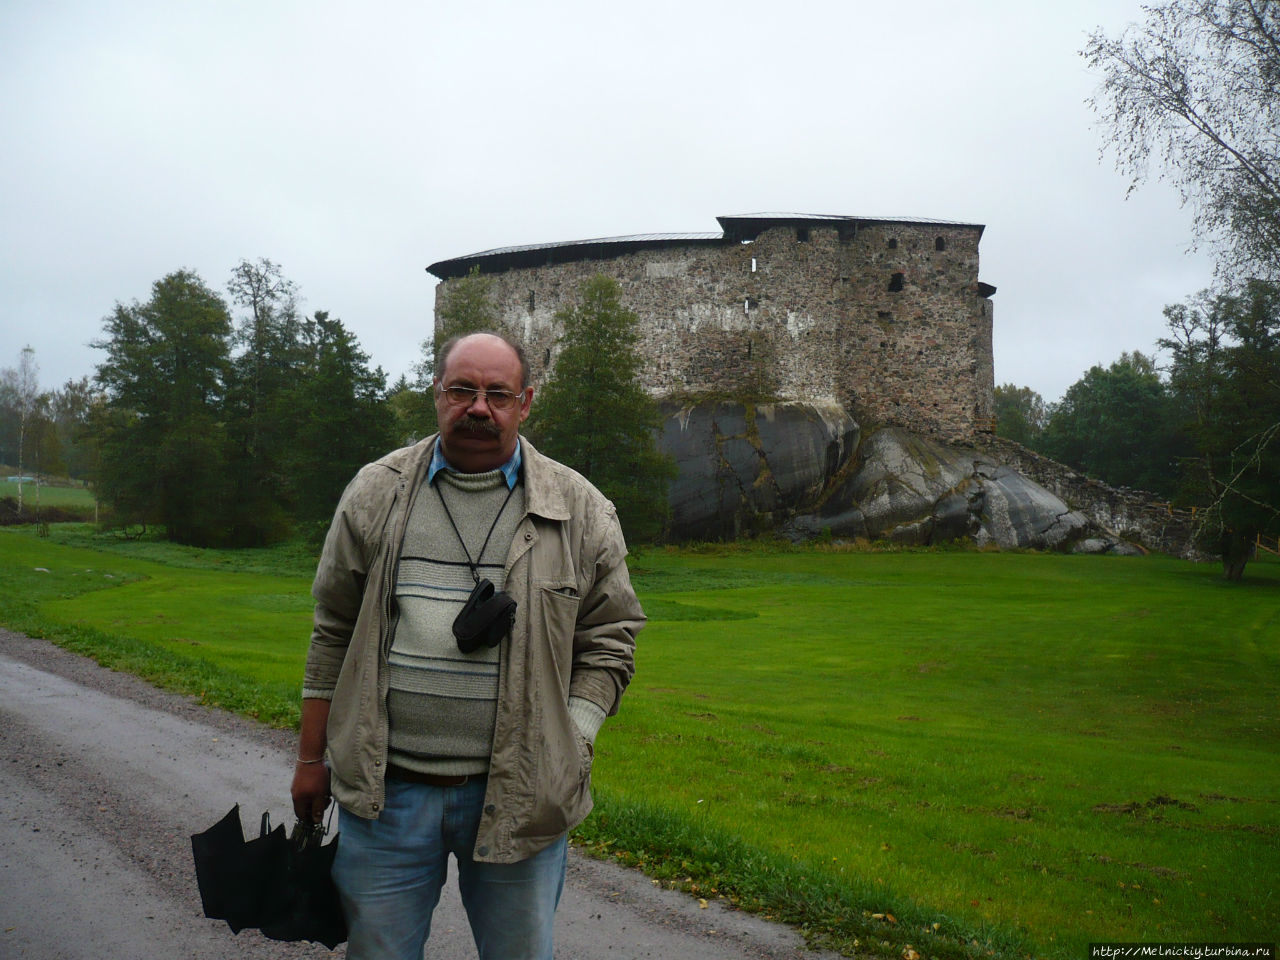 Расеборгский замок Снаппертуна, Финляндия